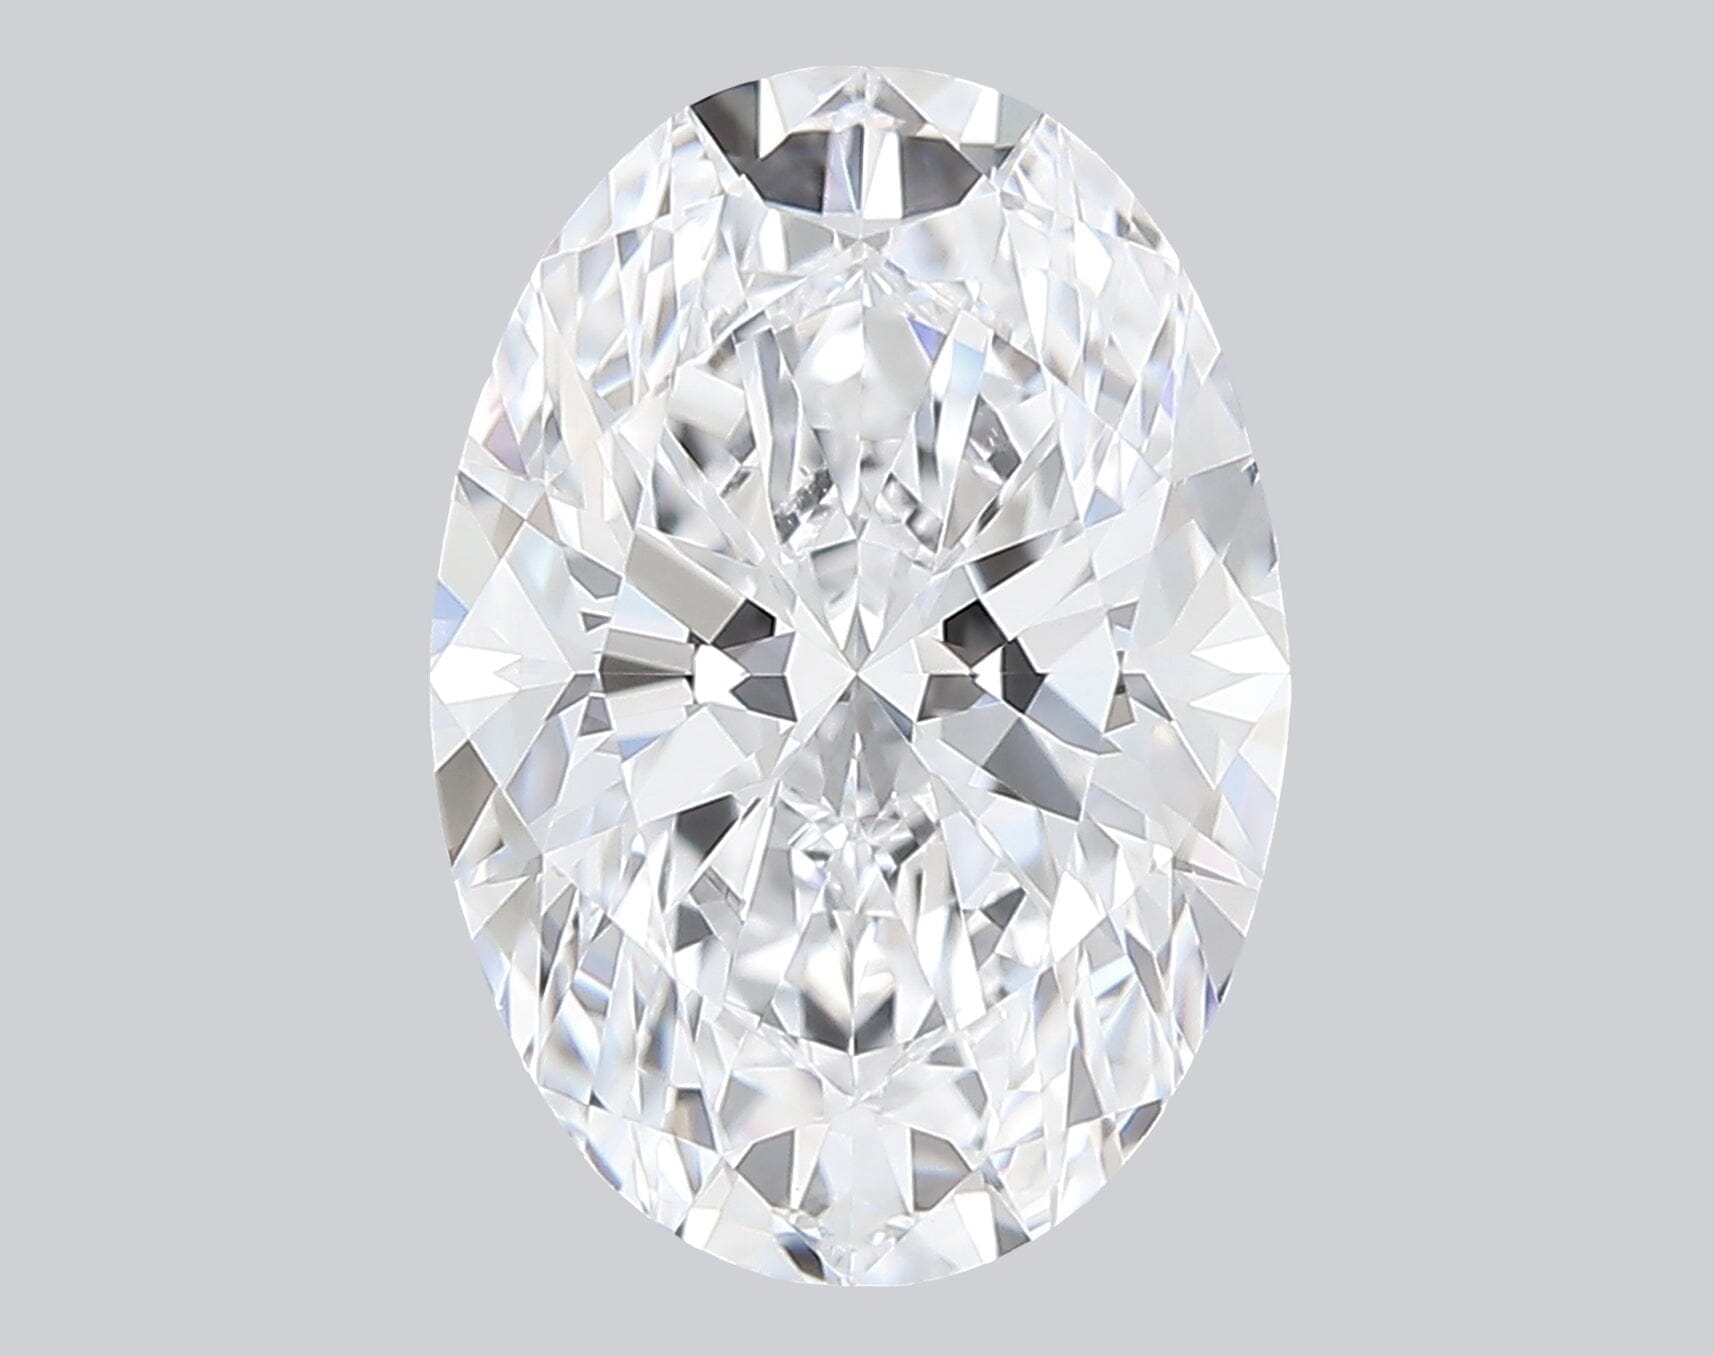 Custom Engagement Ring for Peter 2nd half (3-27-24 js) Pending Princess Bride Diamonds 